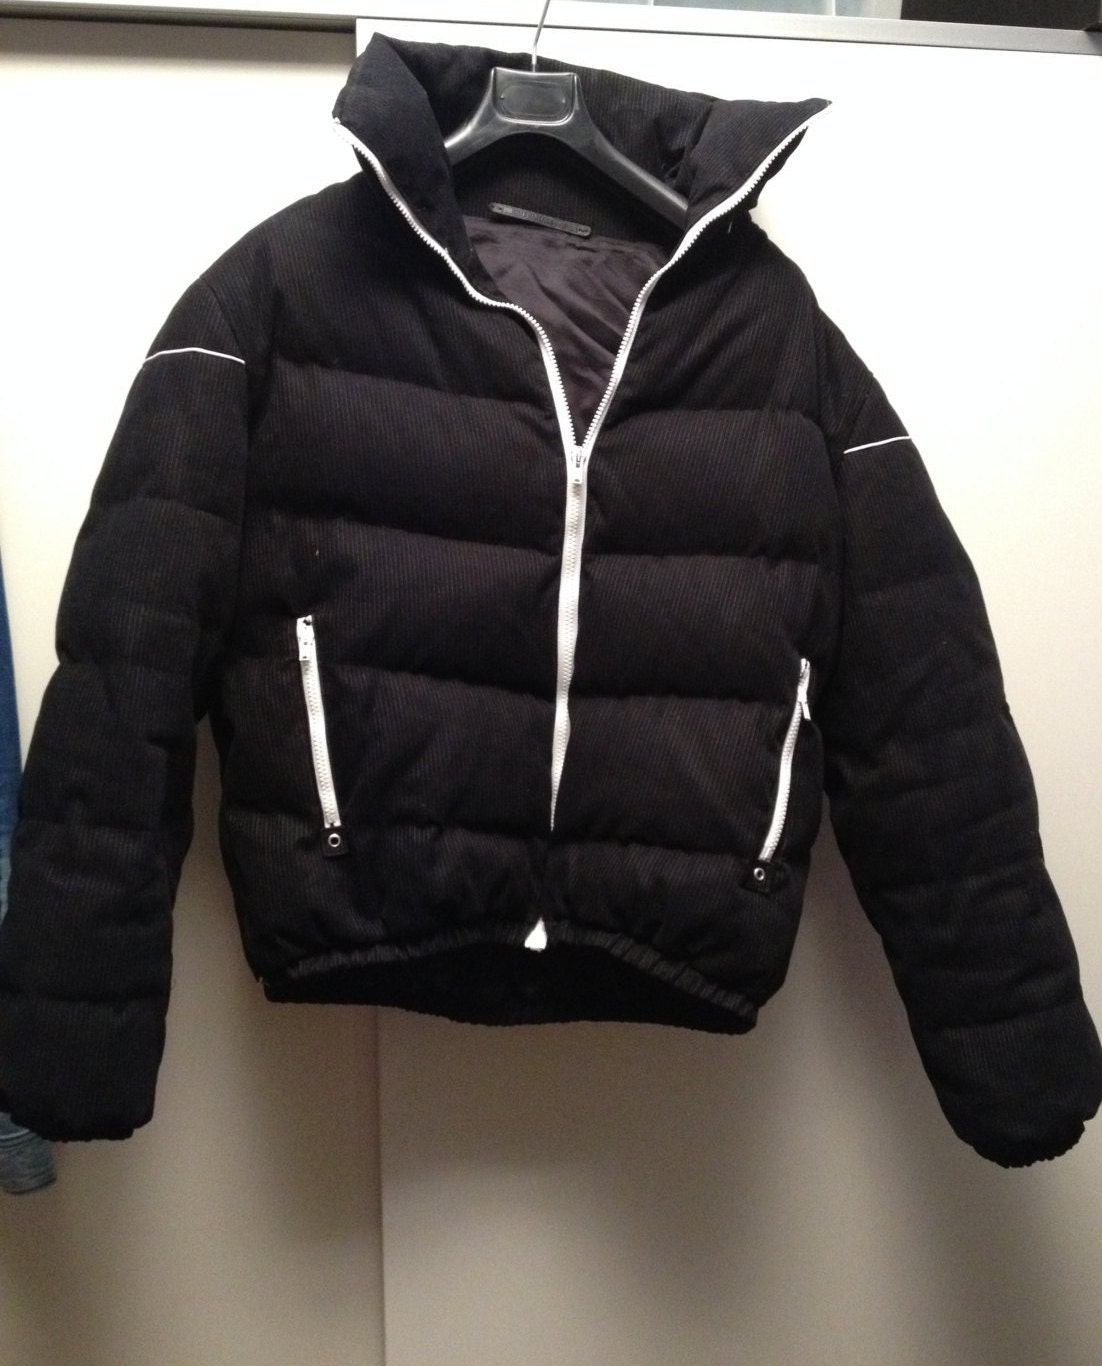 Winter jackets, Jackets, How to wear